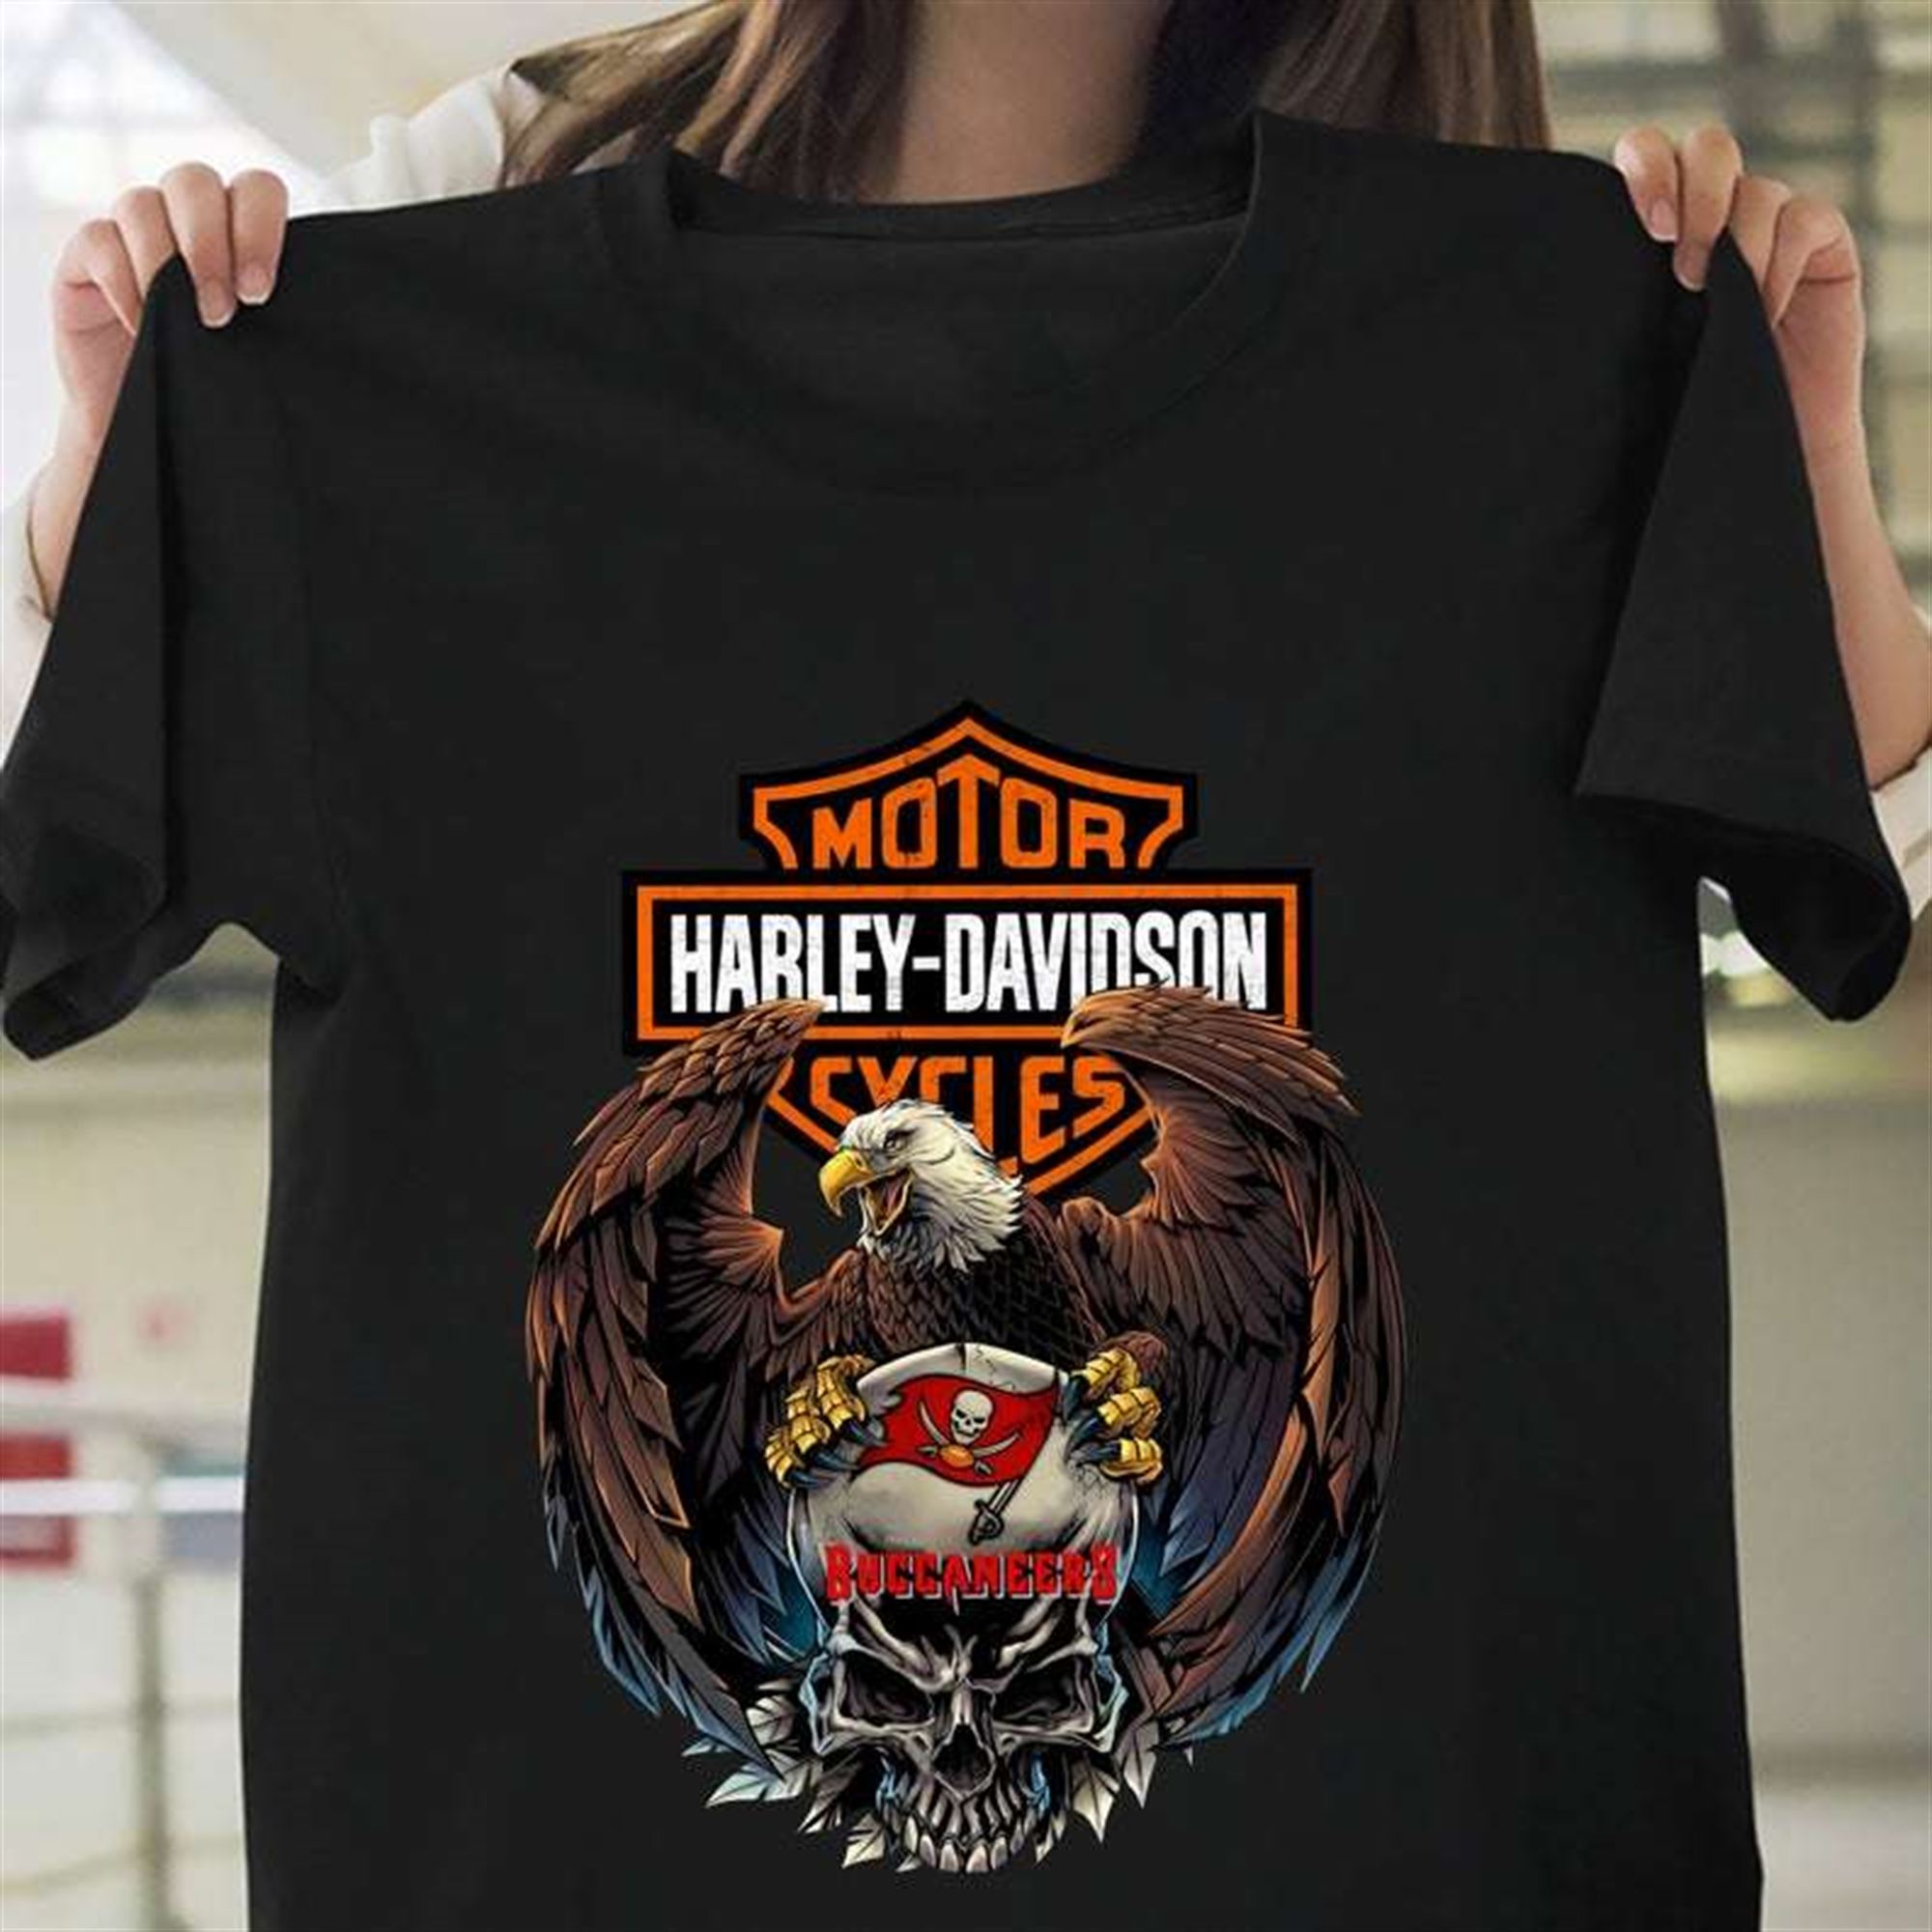 Harley Davidson Tampa Bay Buccaneers T-shirt Plus Size Up To 5x